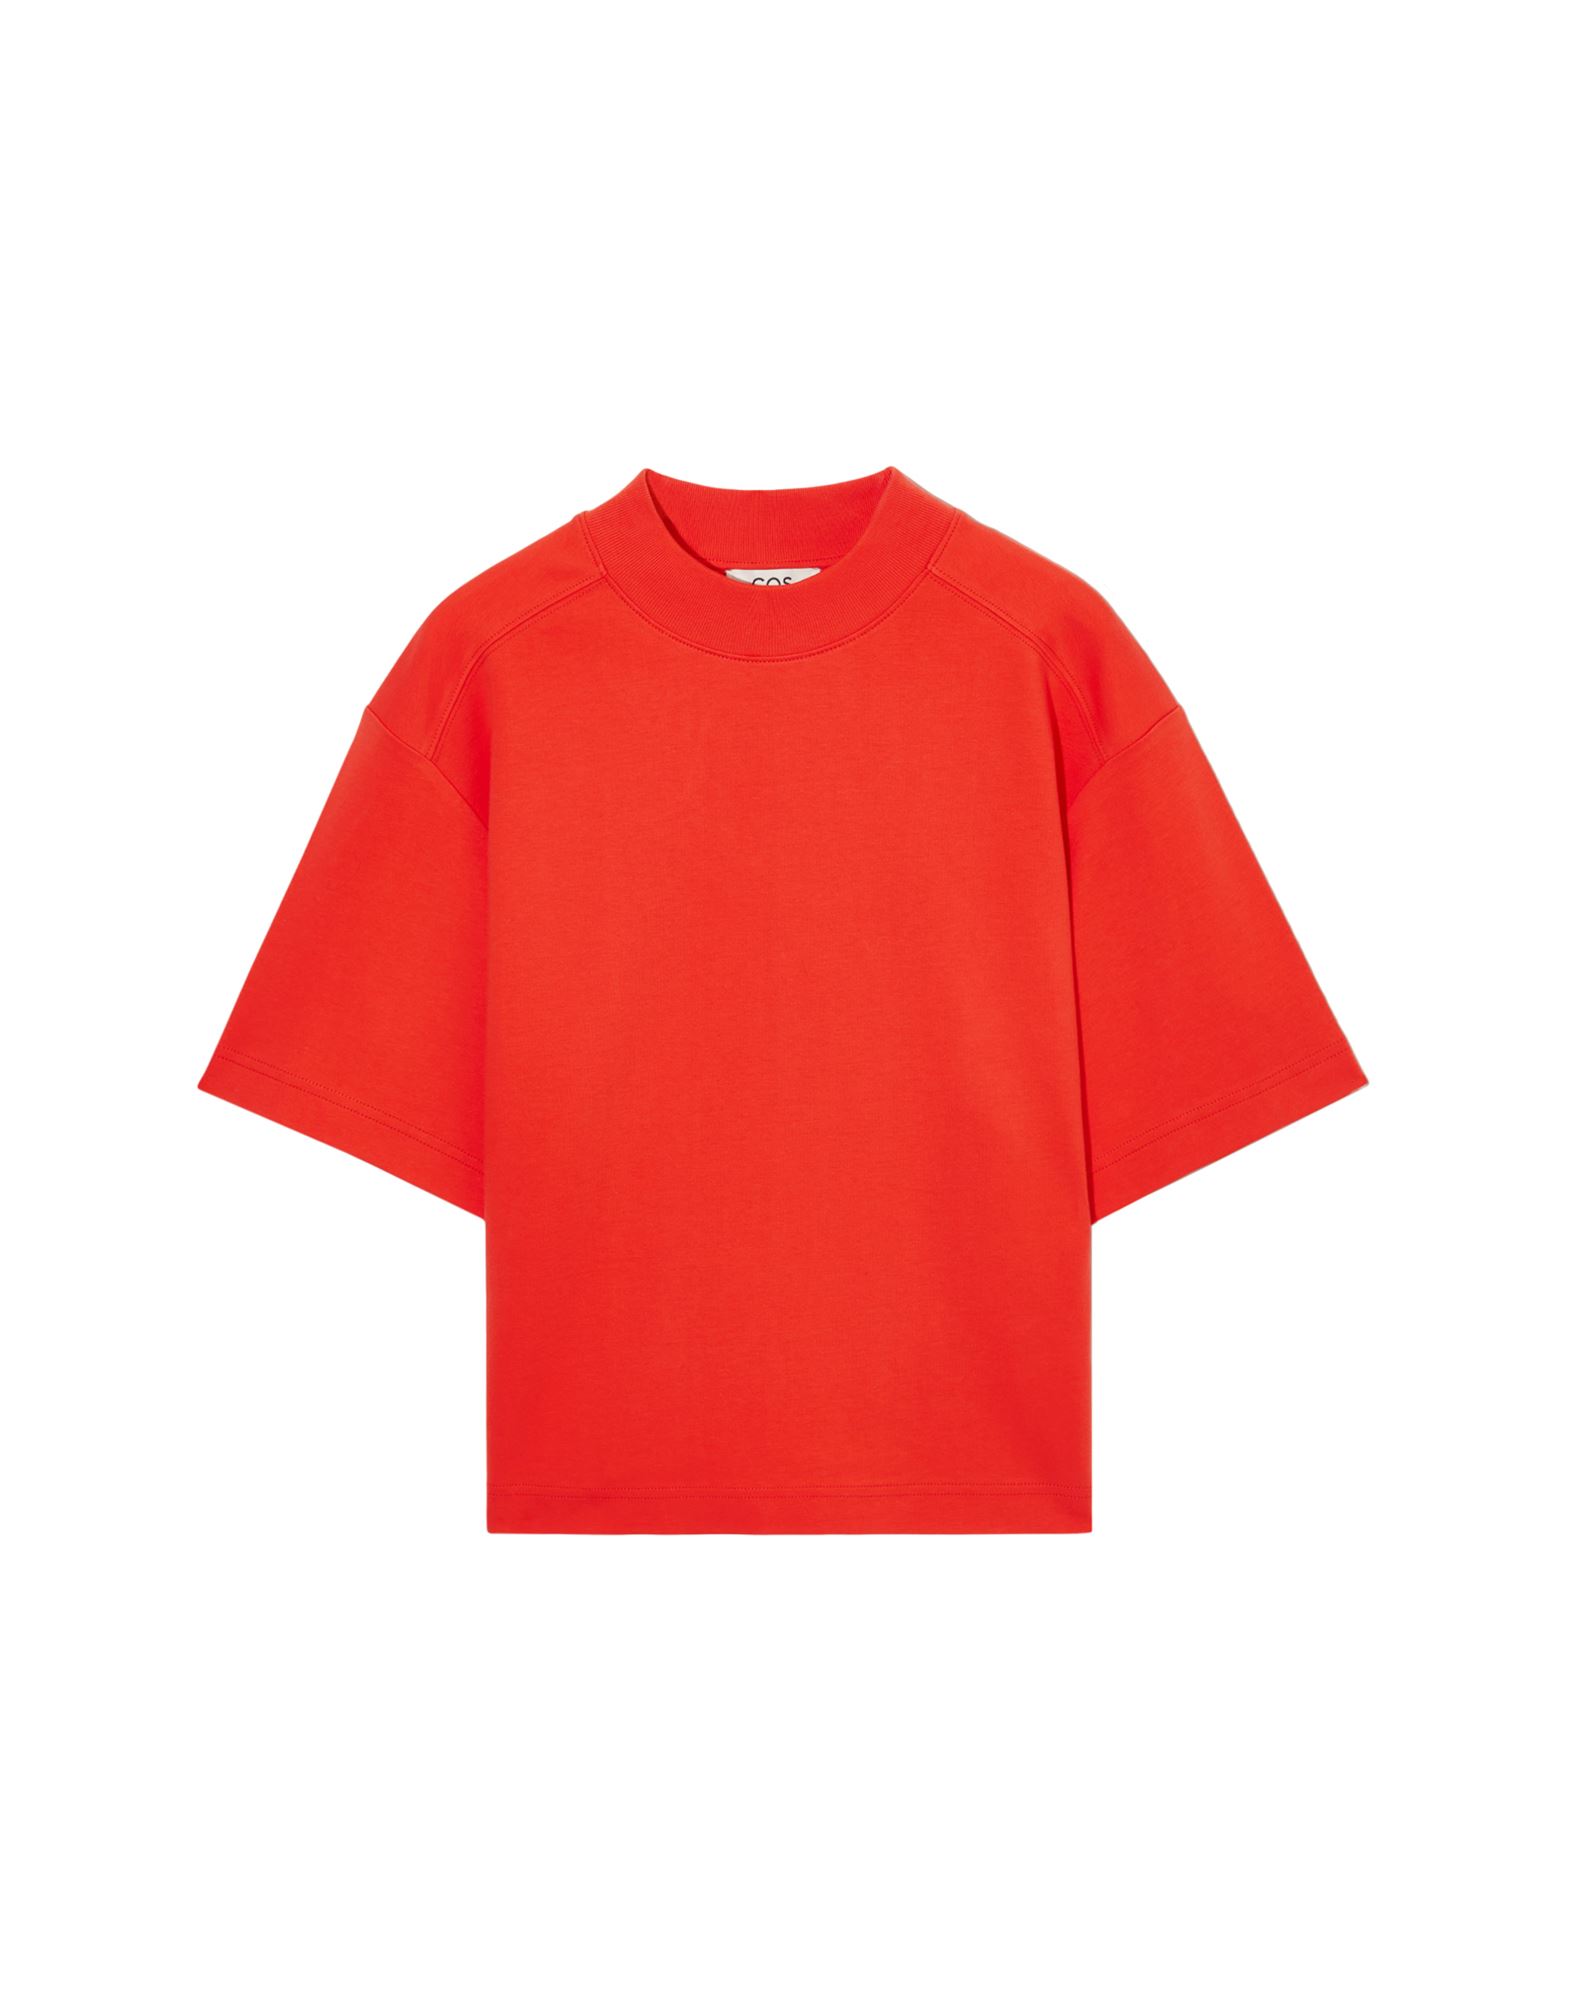 Cos T-shirts In Orange